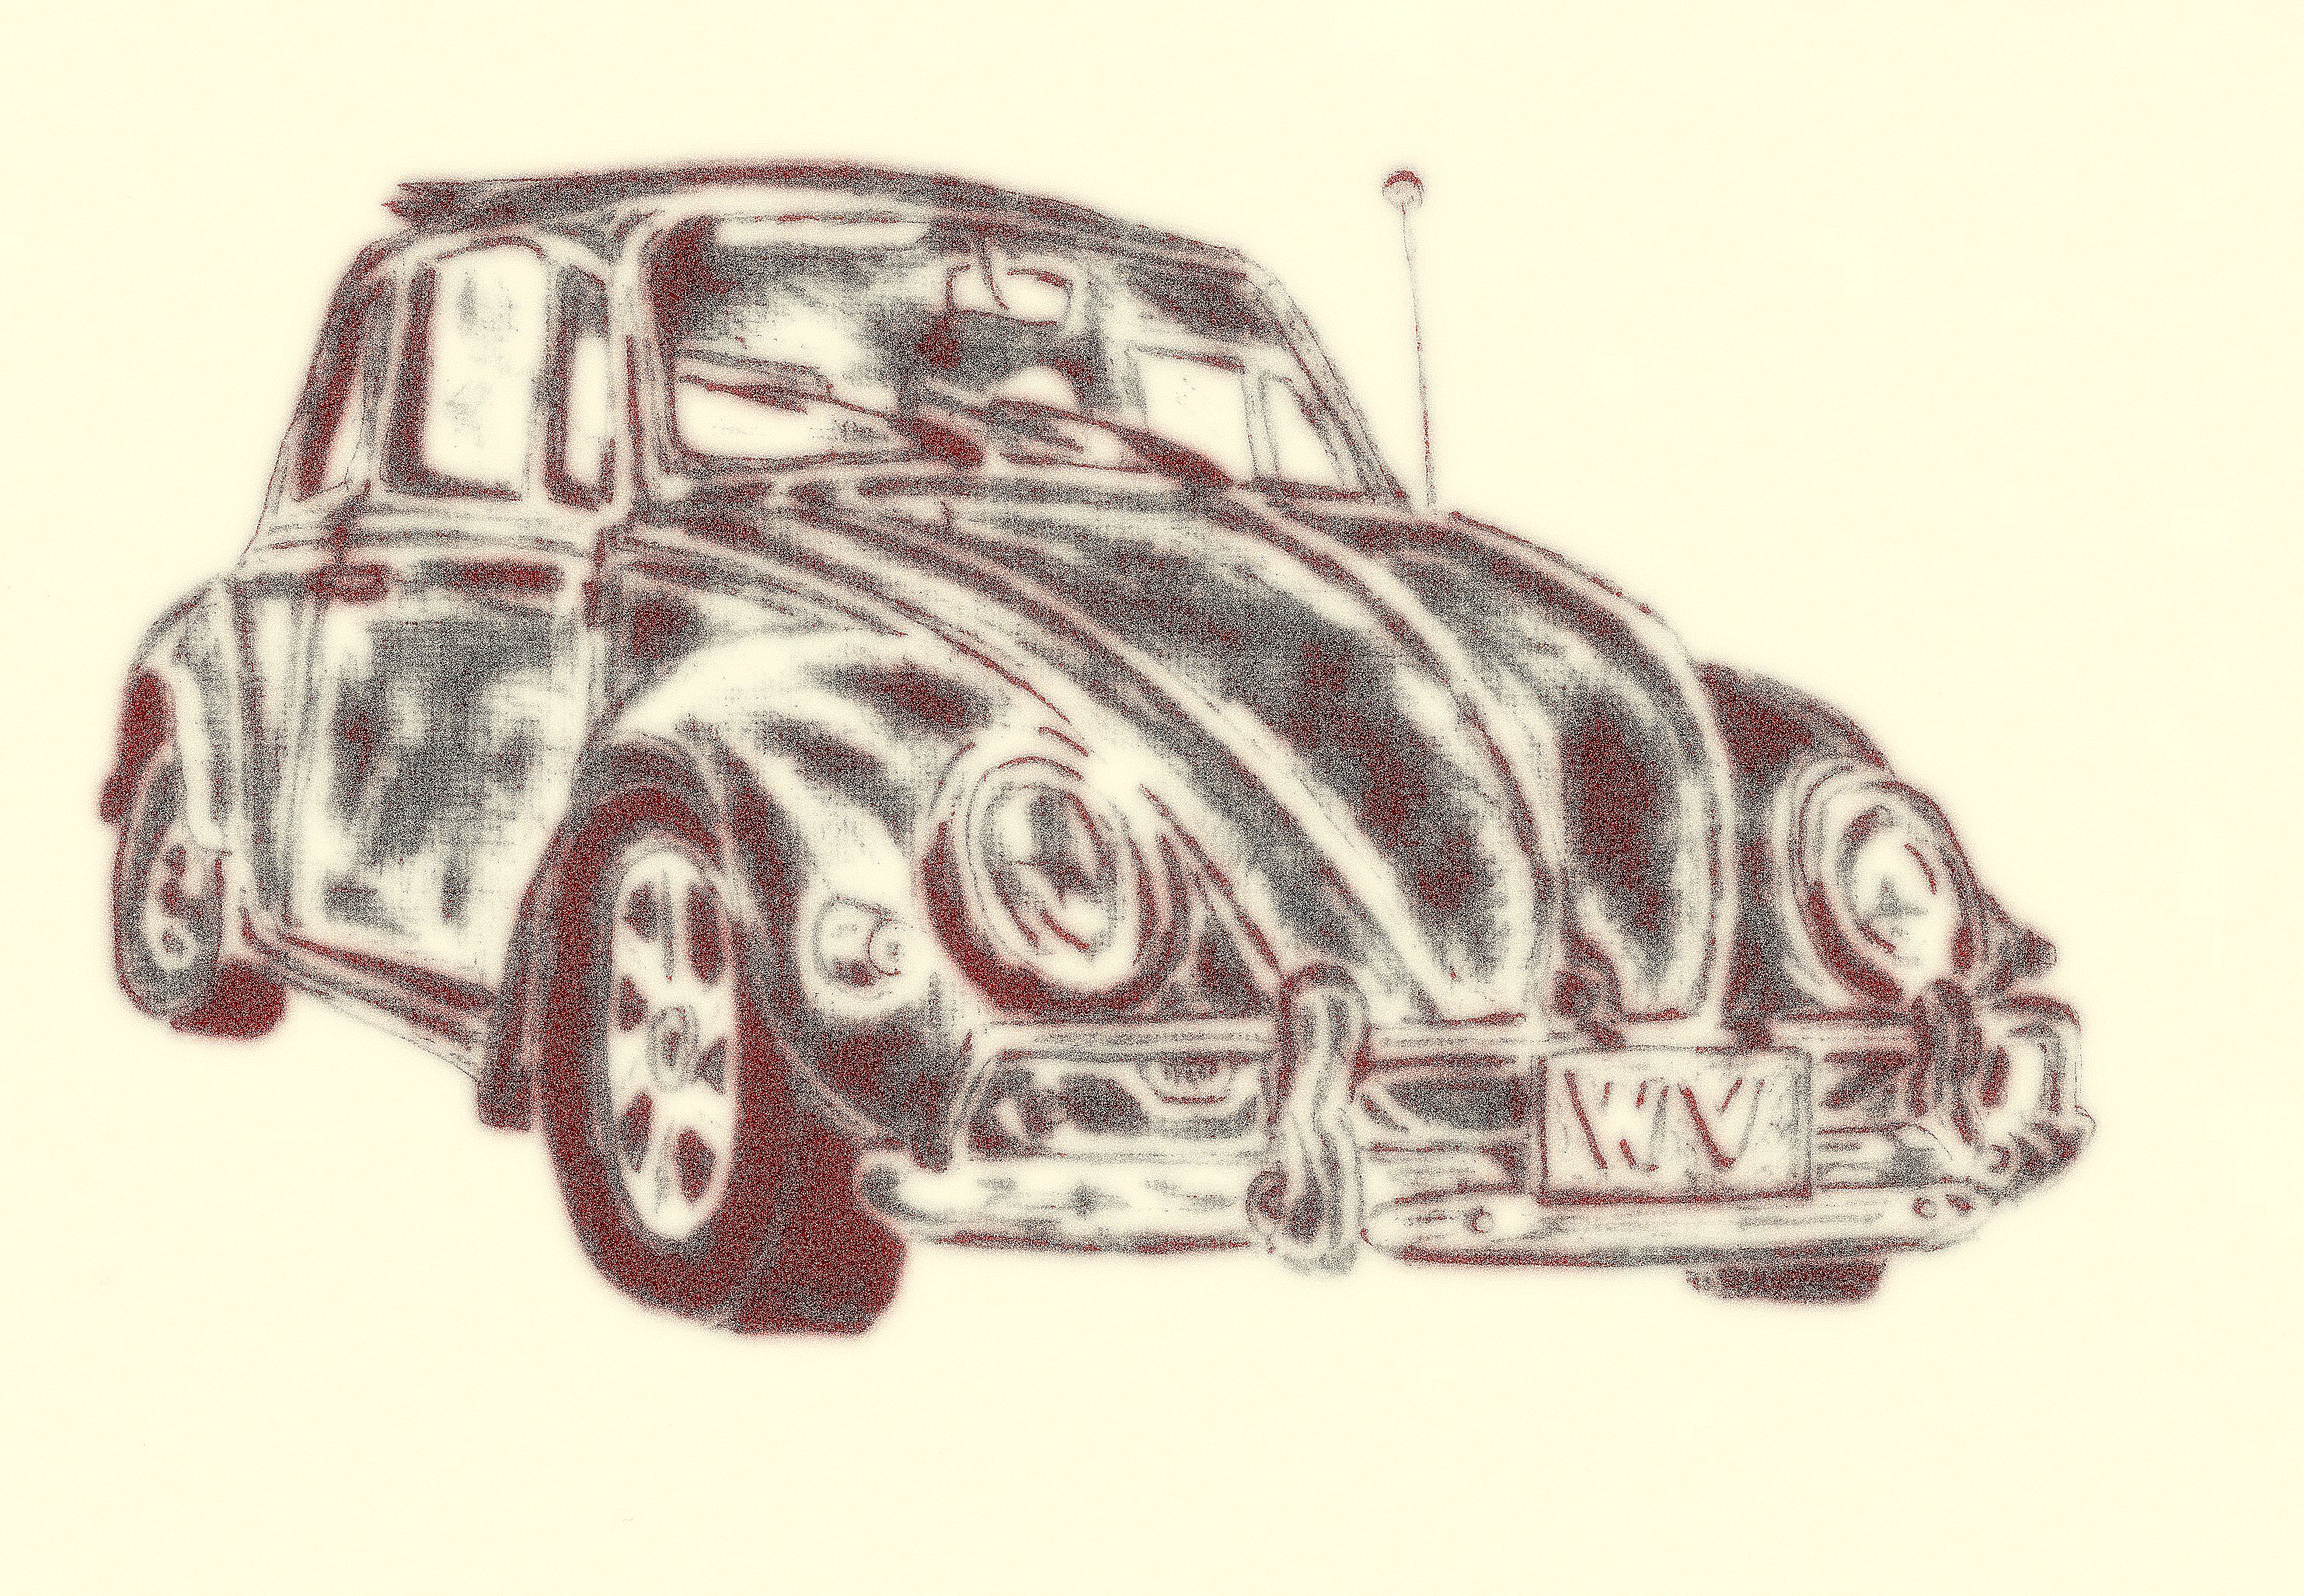 Old VW beetle